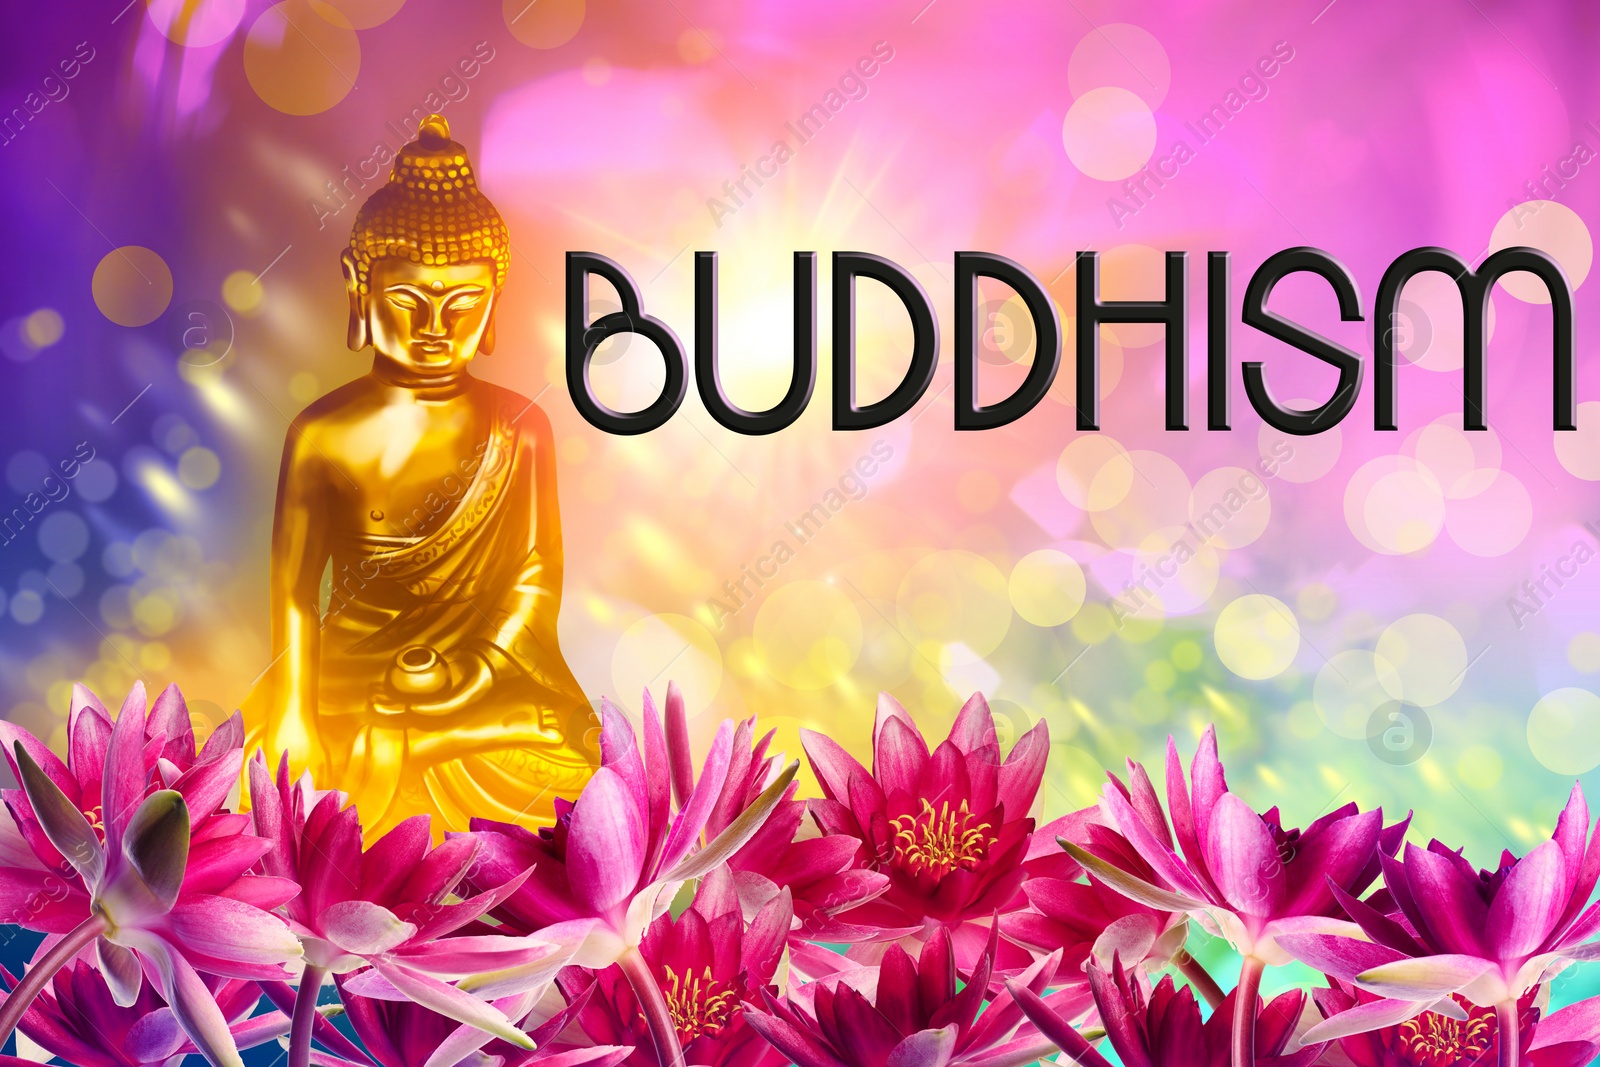 Image of Buddha figure among lotus flowers and word Buddhism on bright background